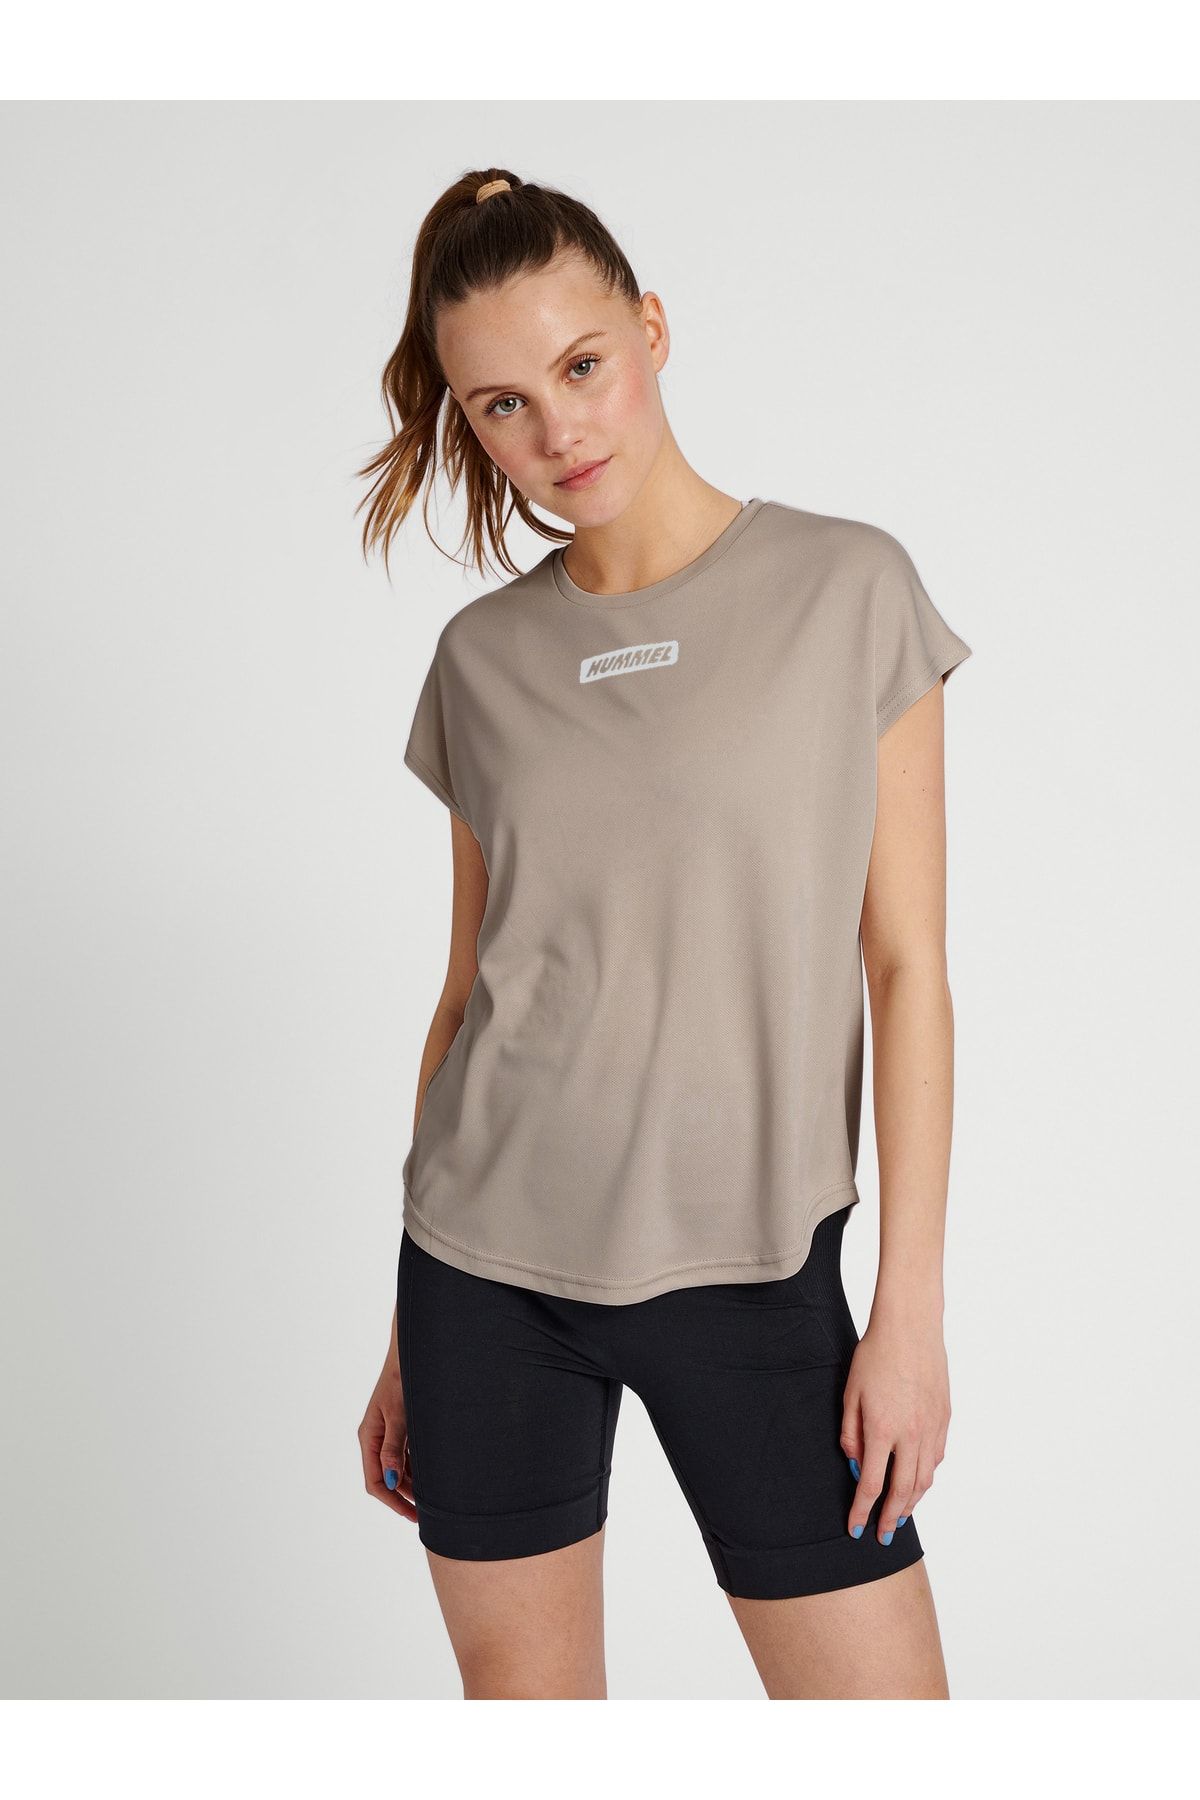 HUMMEL T-Shirt - Beige - Relaxed fit - Trendyol | T-Shirts